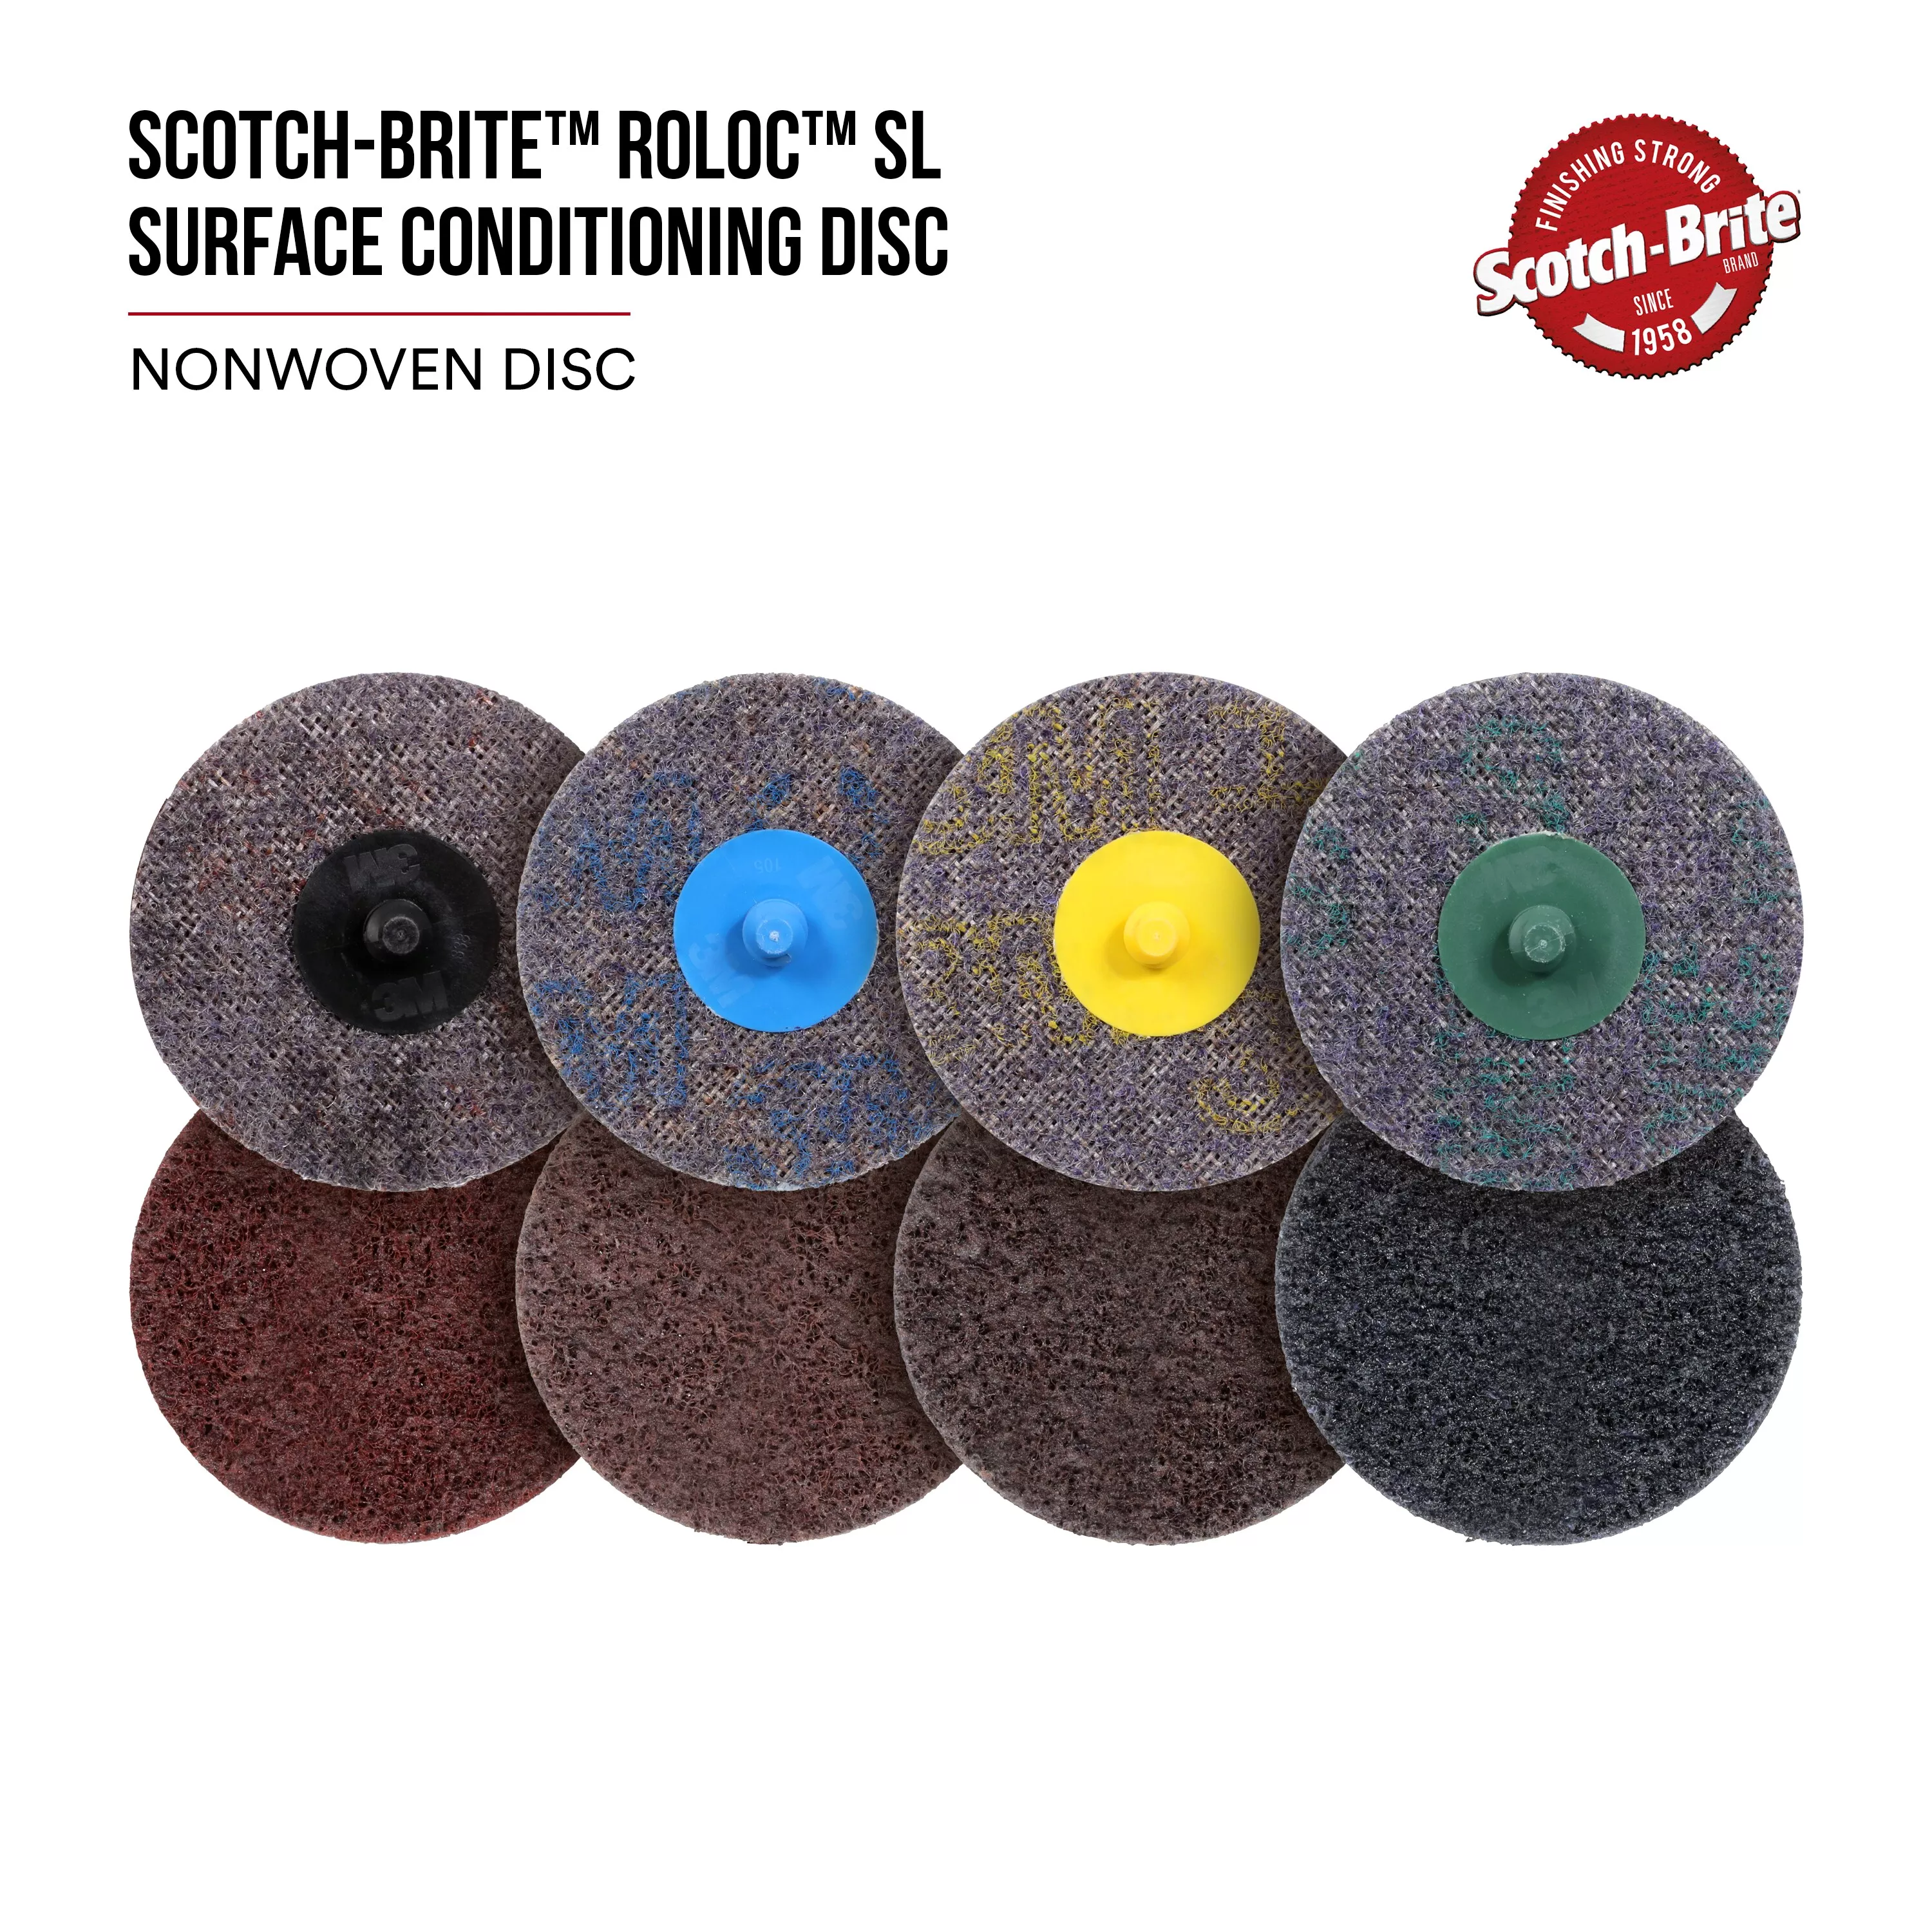 SKU 7100029968 | Scotch-Brite™ Roloc™ SL Surface Conditioning Disc